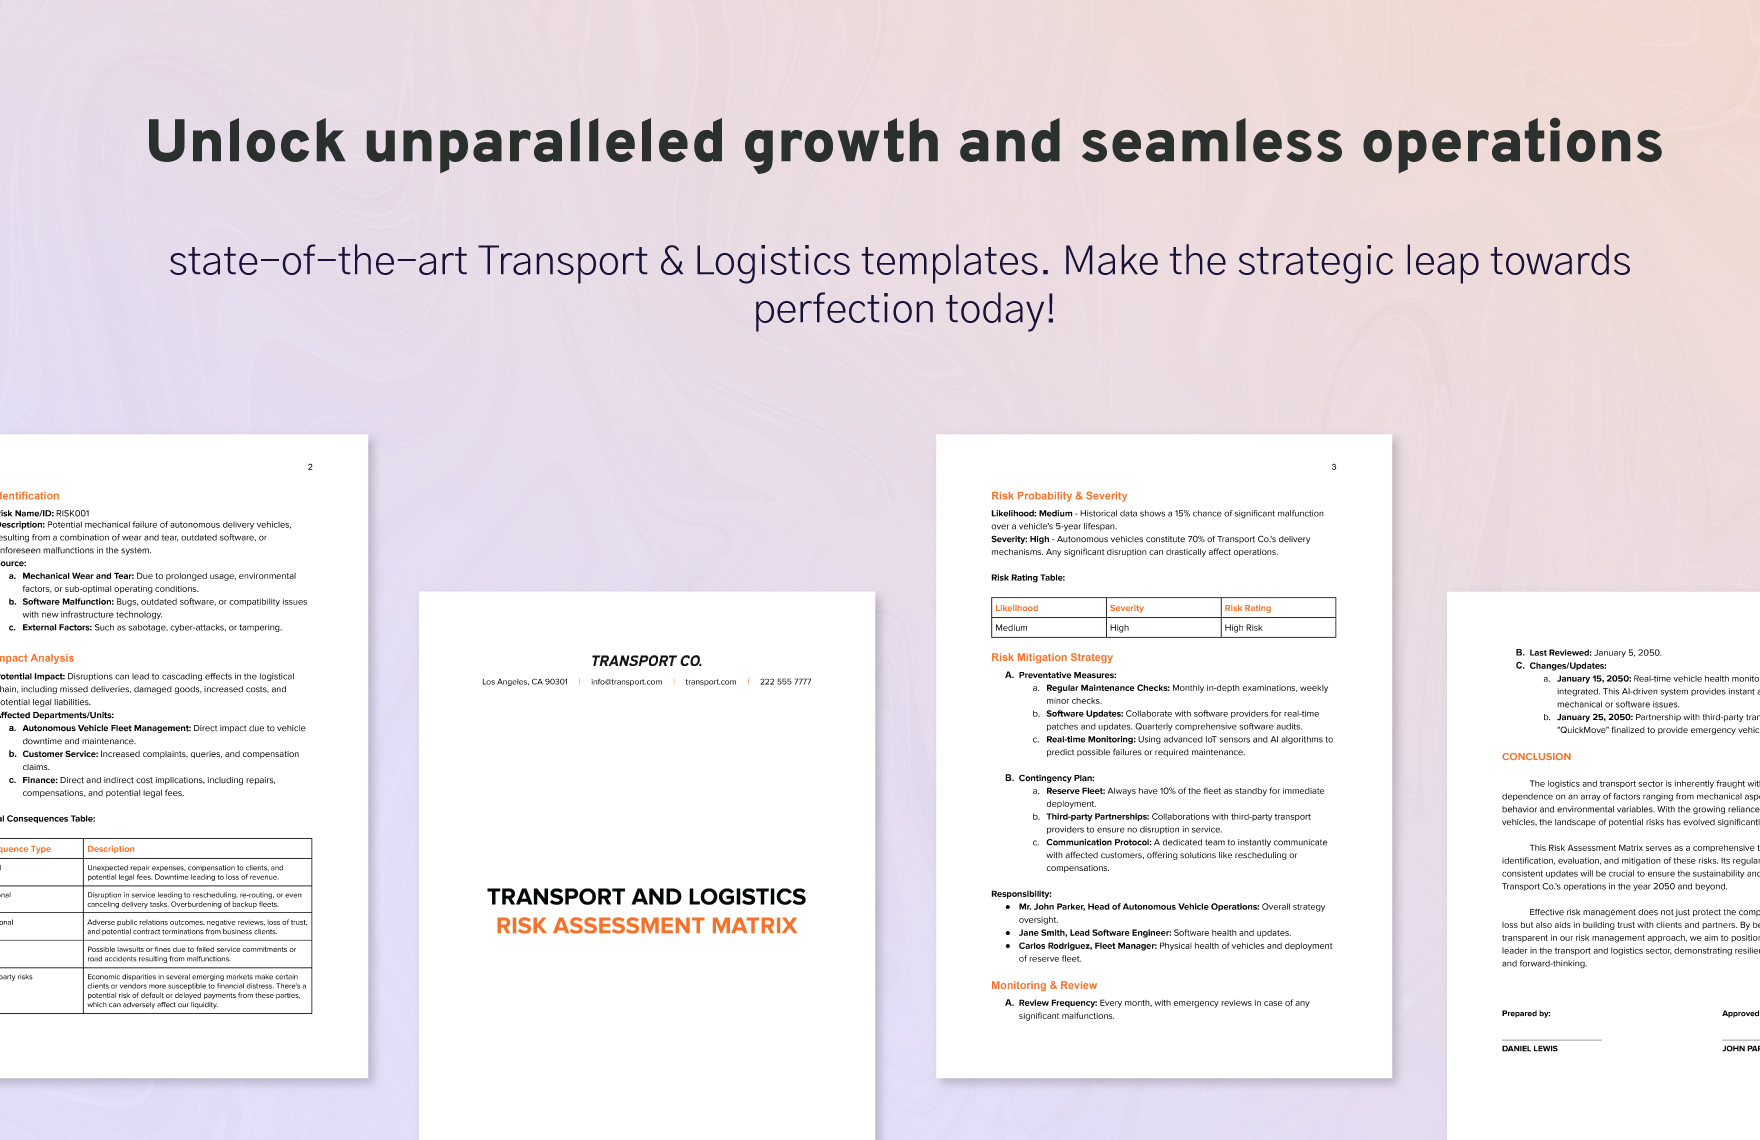 Transport and Logistics Risk Assessment Matrix Template